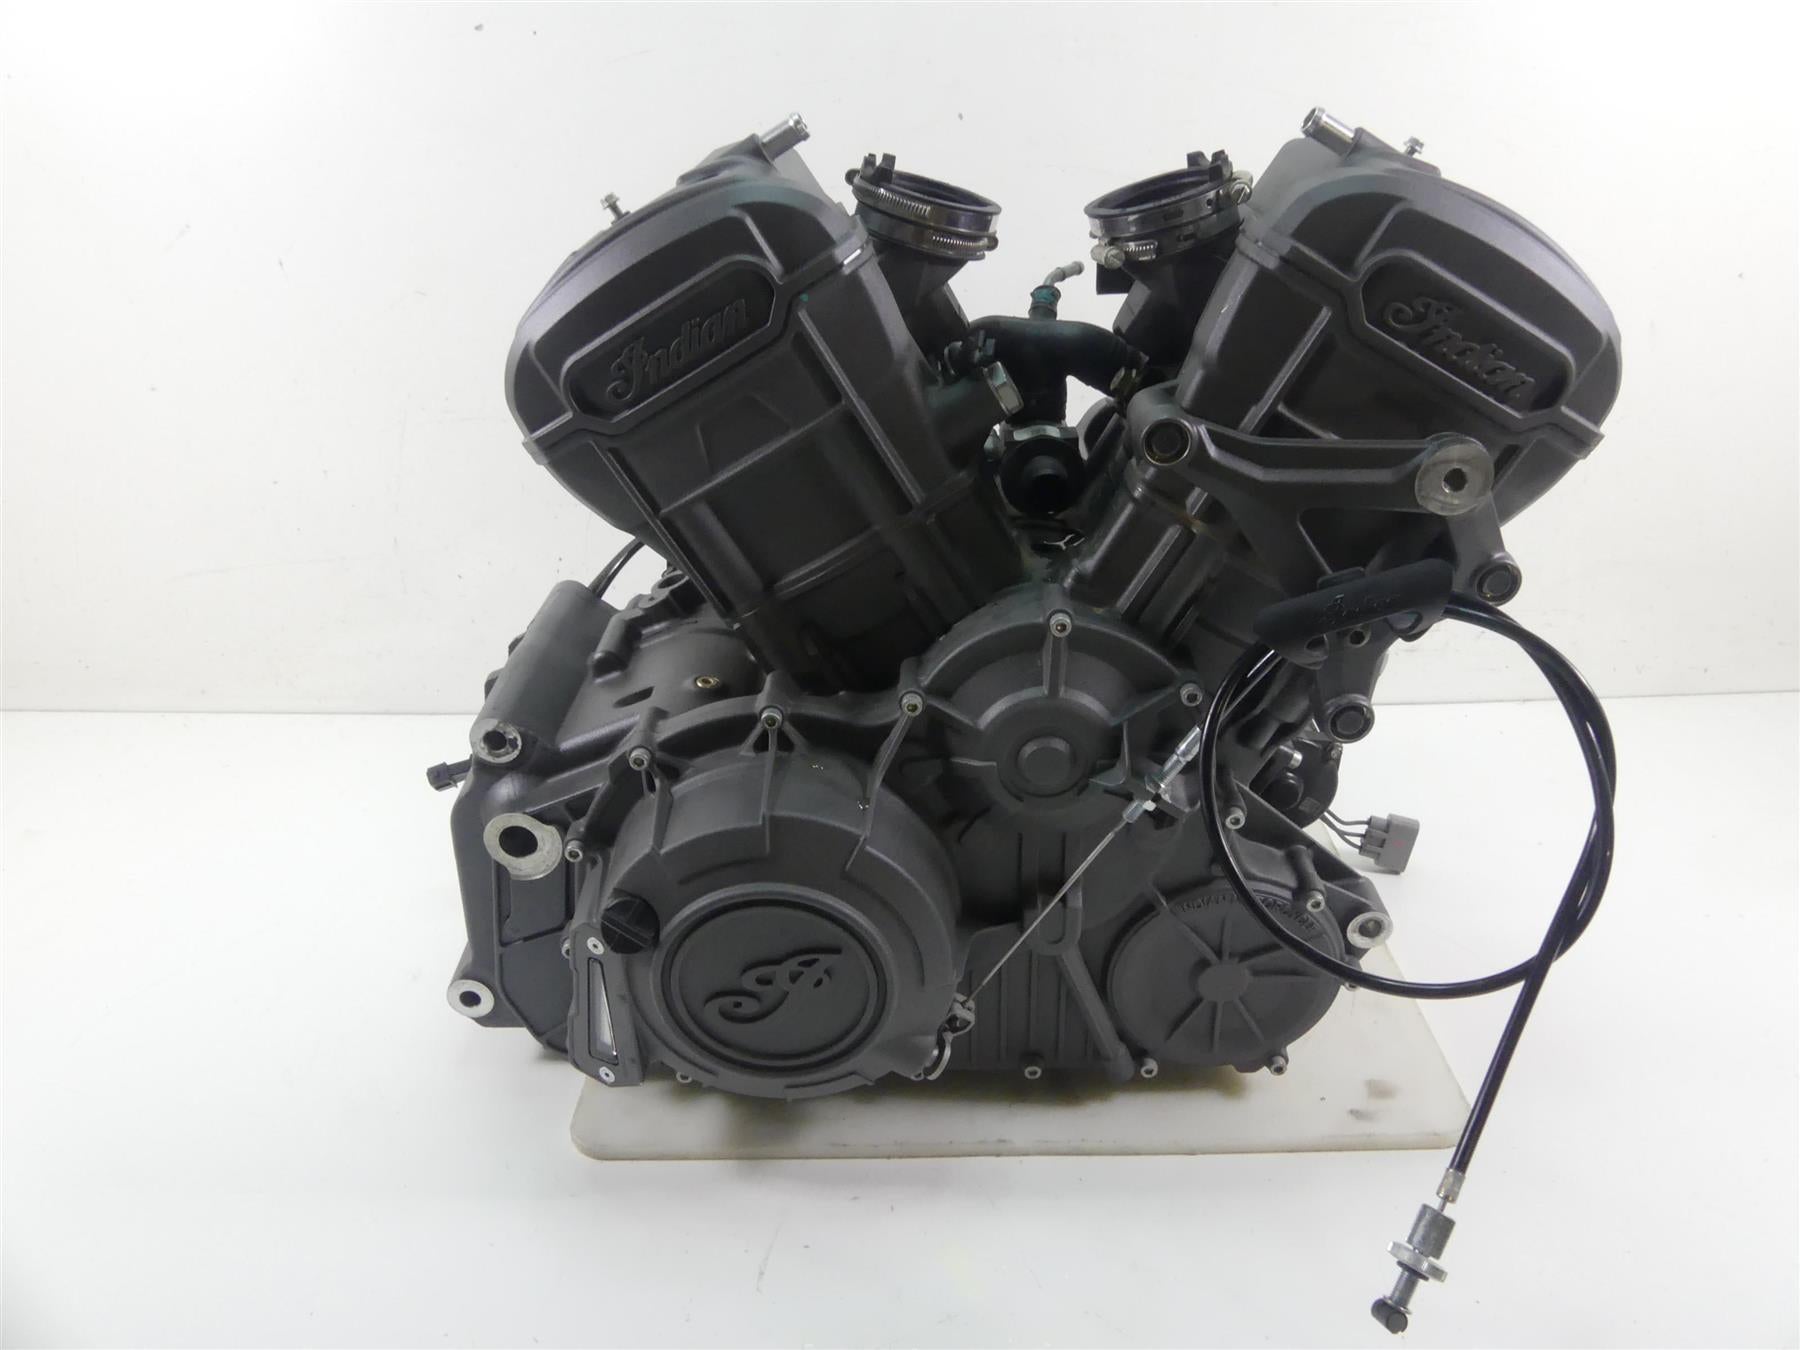 2022 Indian FTR1200 S Running Engine Motor Transmission 973mi Only! -Vid 1205768 | Mototech271